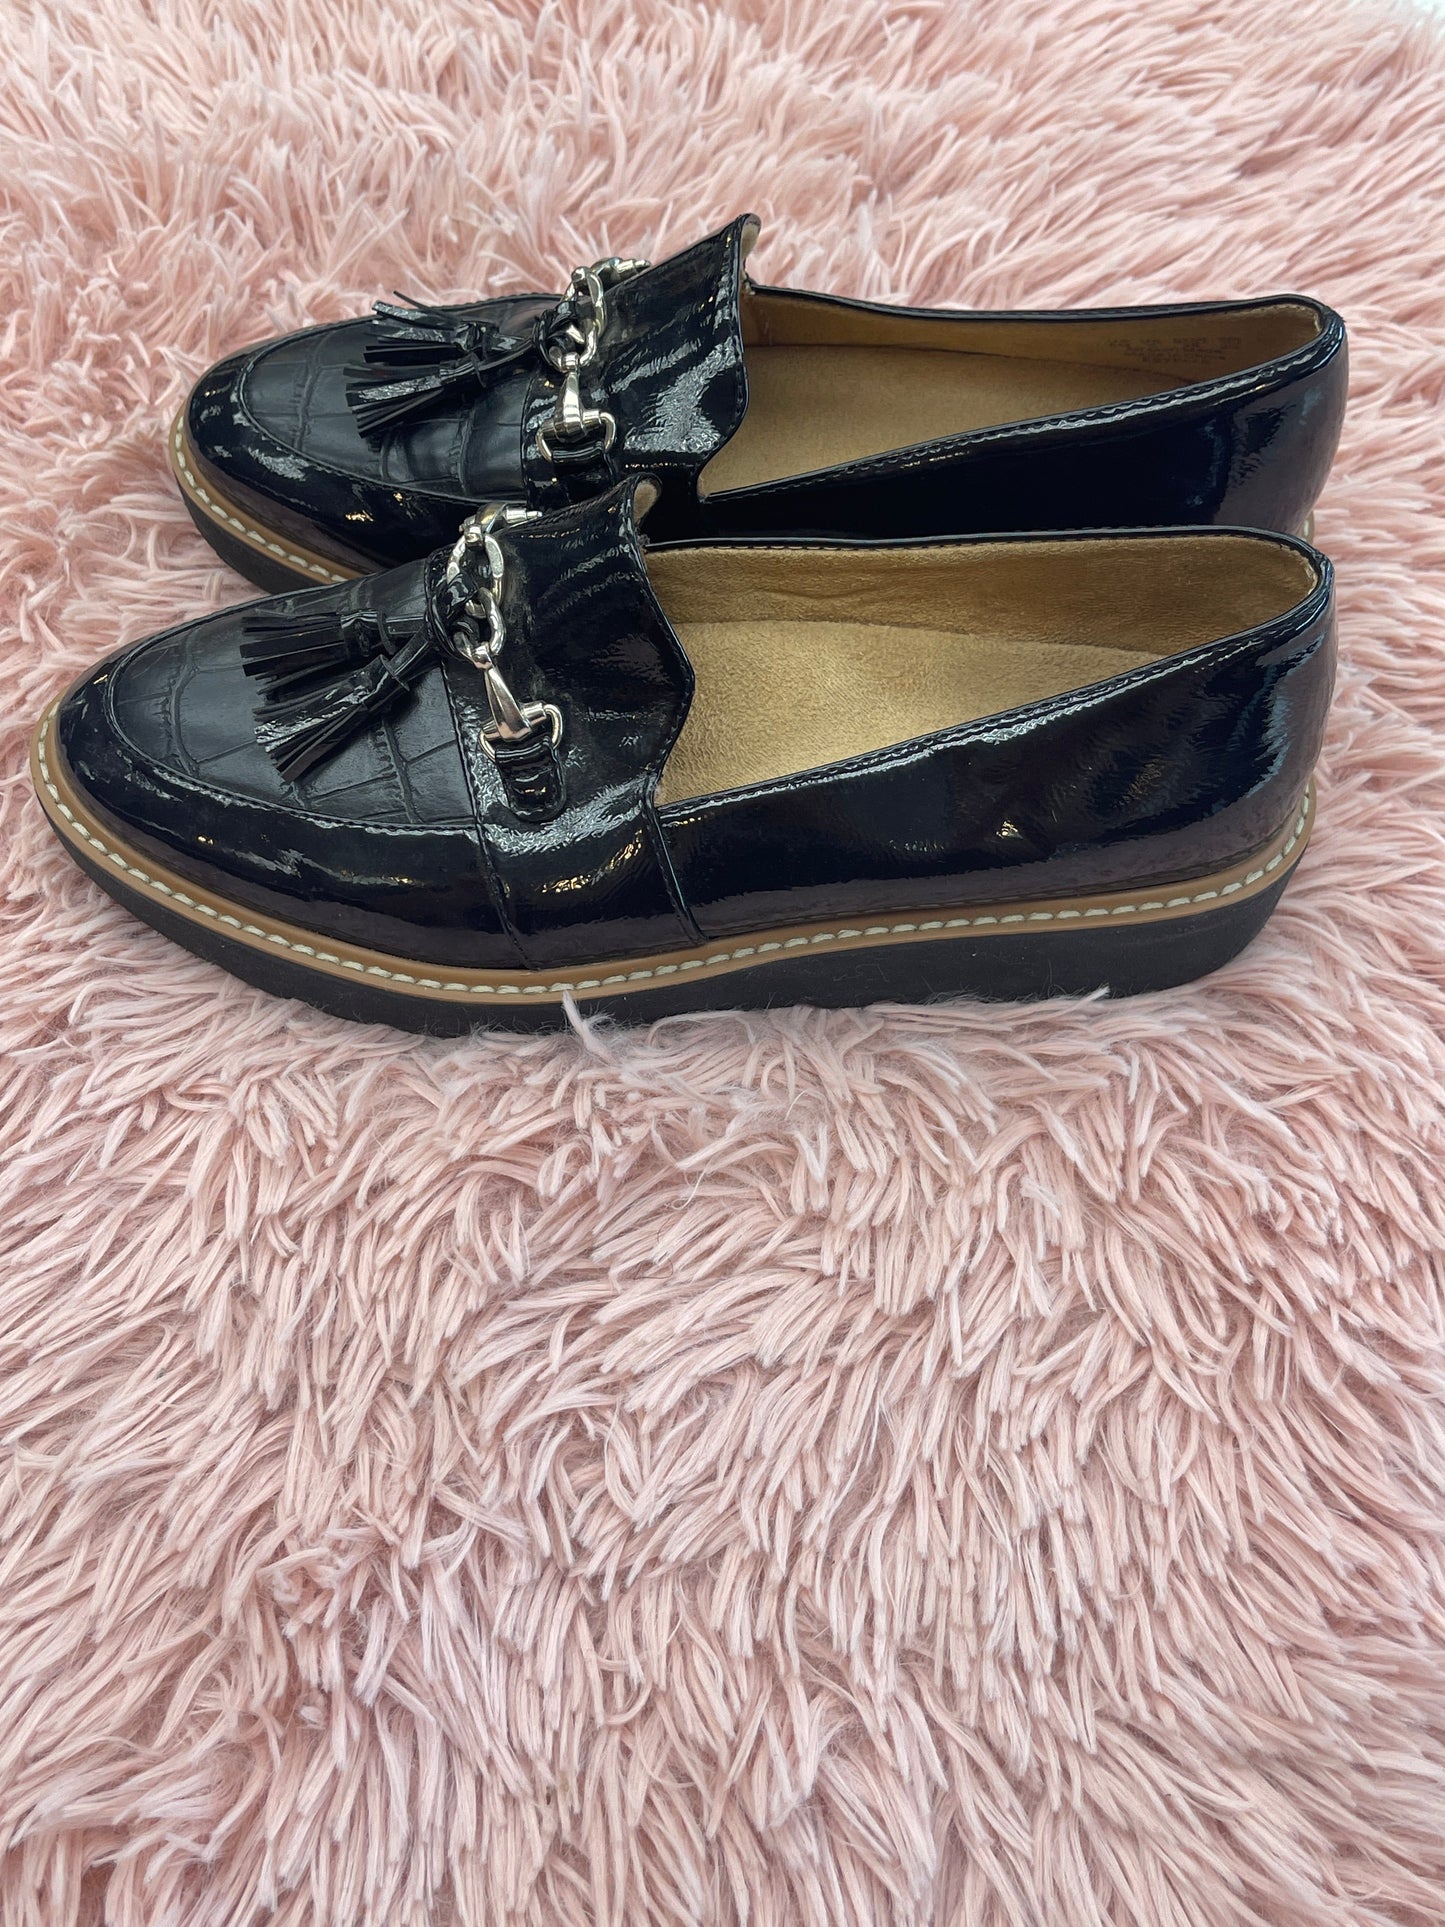 Black Shoes Flats Loafer Oxford Naturalizer, Size 8